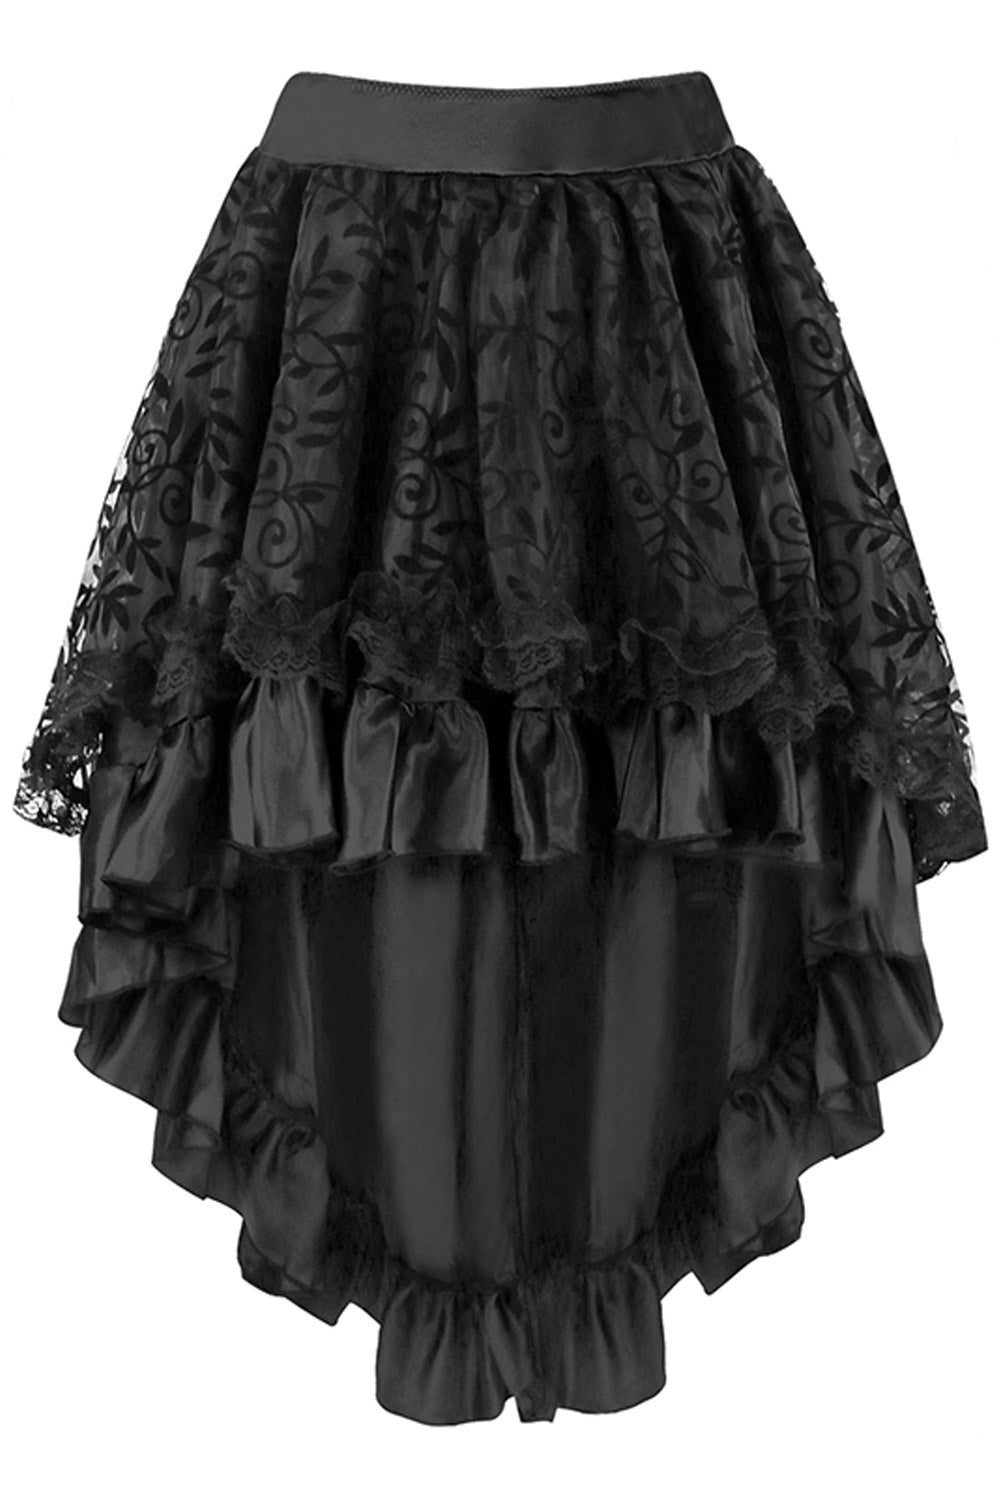 Atomic Black Satin Tiered Lace Skirt